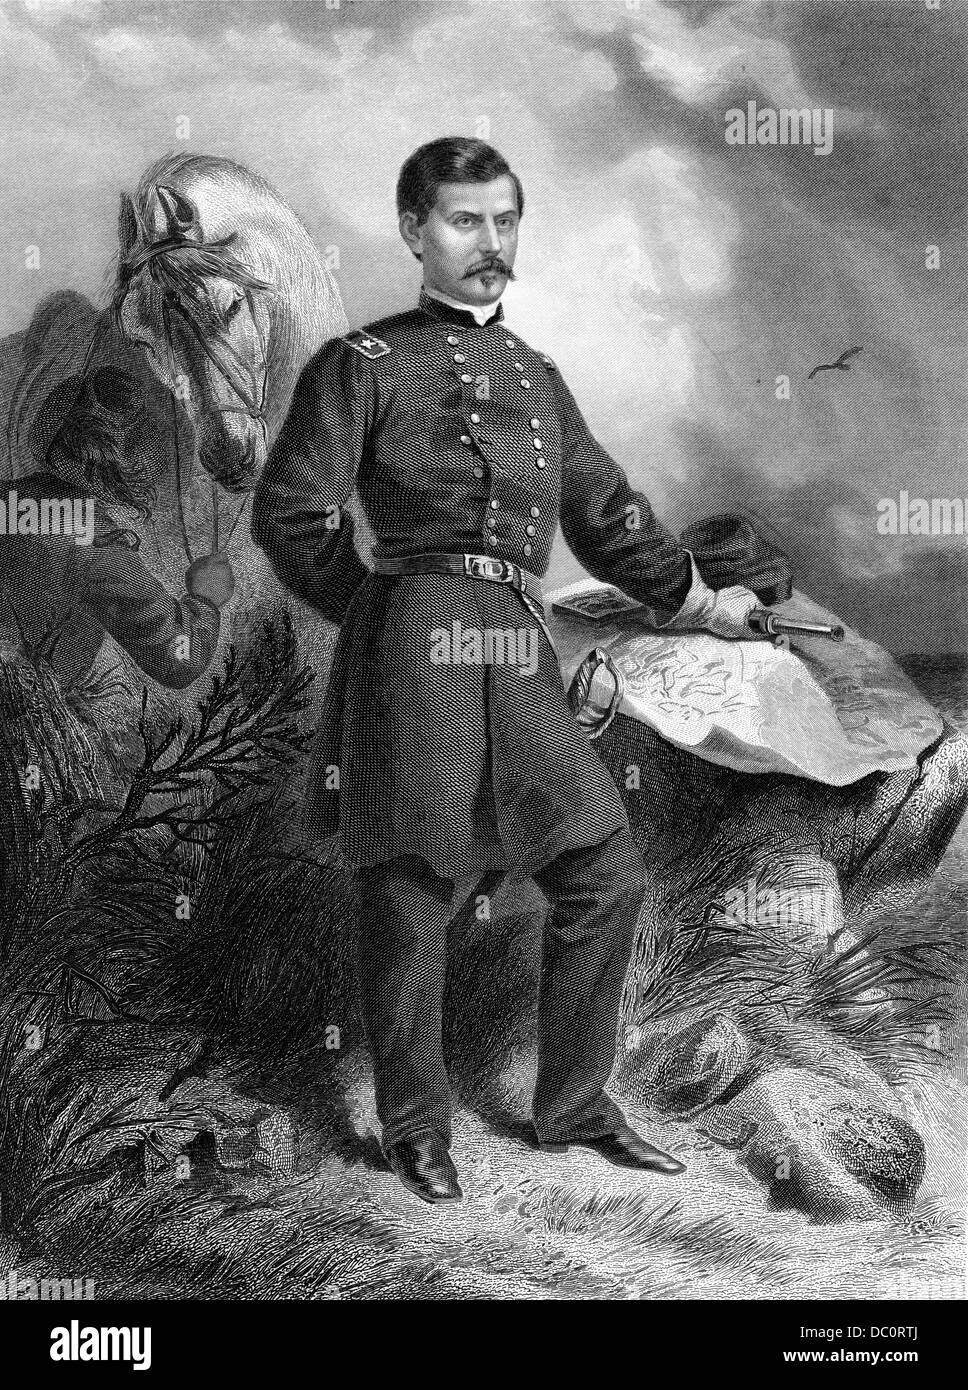 1800s 1860s 1862 PORTRAIT GENERAL GEORGE BRINTON MCCLELLAN UNION GENERAL DURING AMERICAN CIVIL WAR Stock Photo